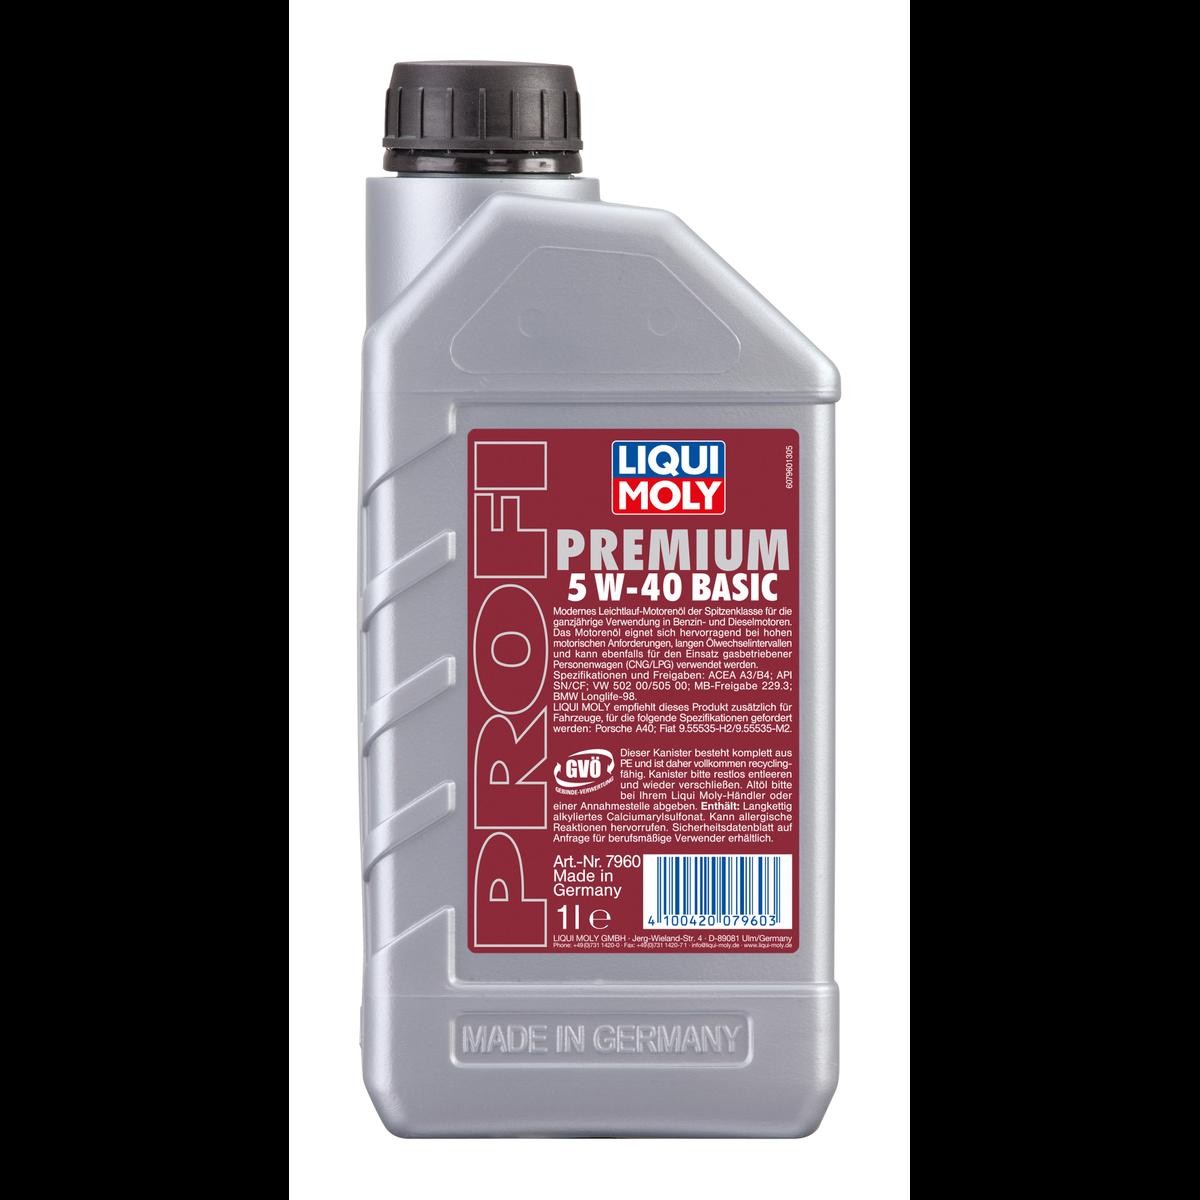 LIQUI MOLY Profi Premium, Basic 5W-40, 1l, Synthetic Oil Motor oil 7960 buy